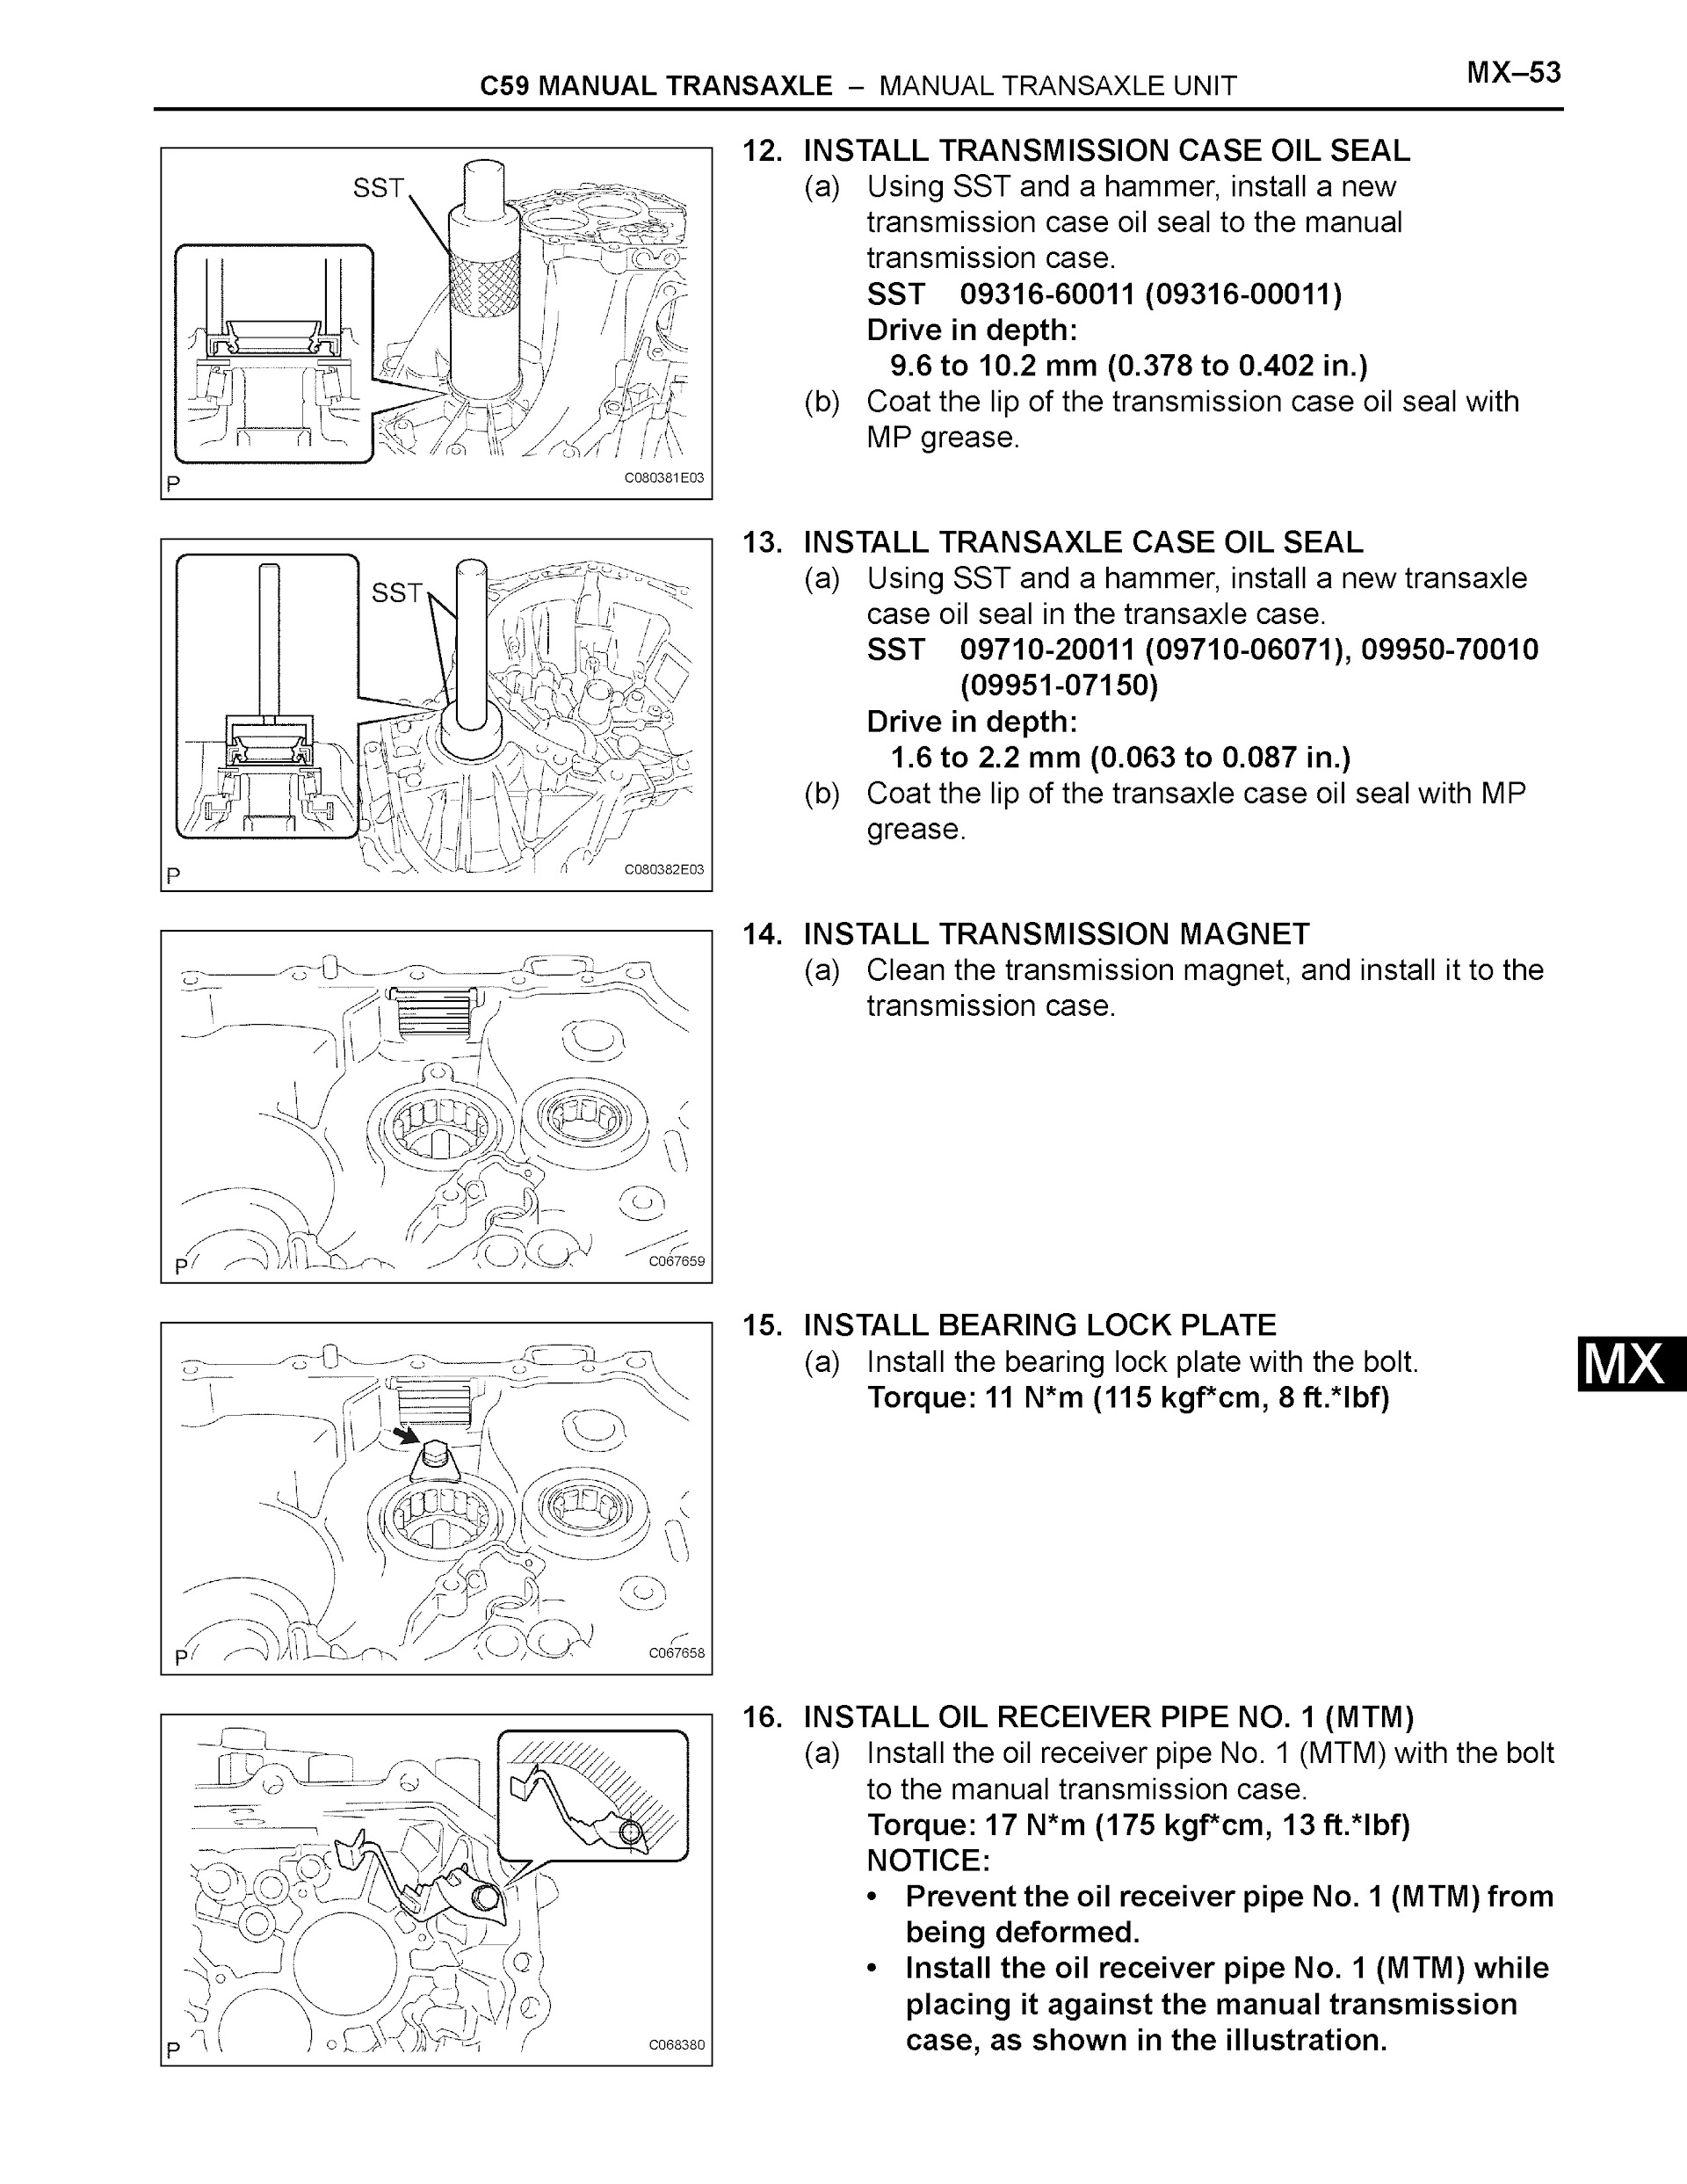 2007 Toyota Corolla Matrix Repair Manual, C56 Manual Transaxle